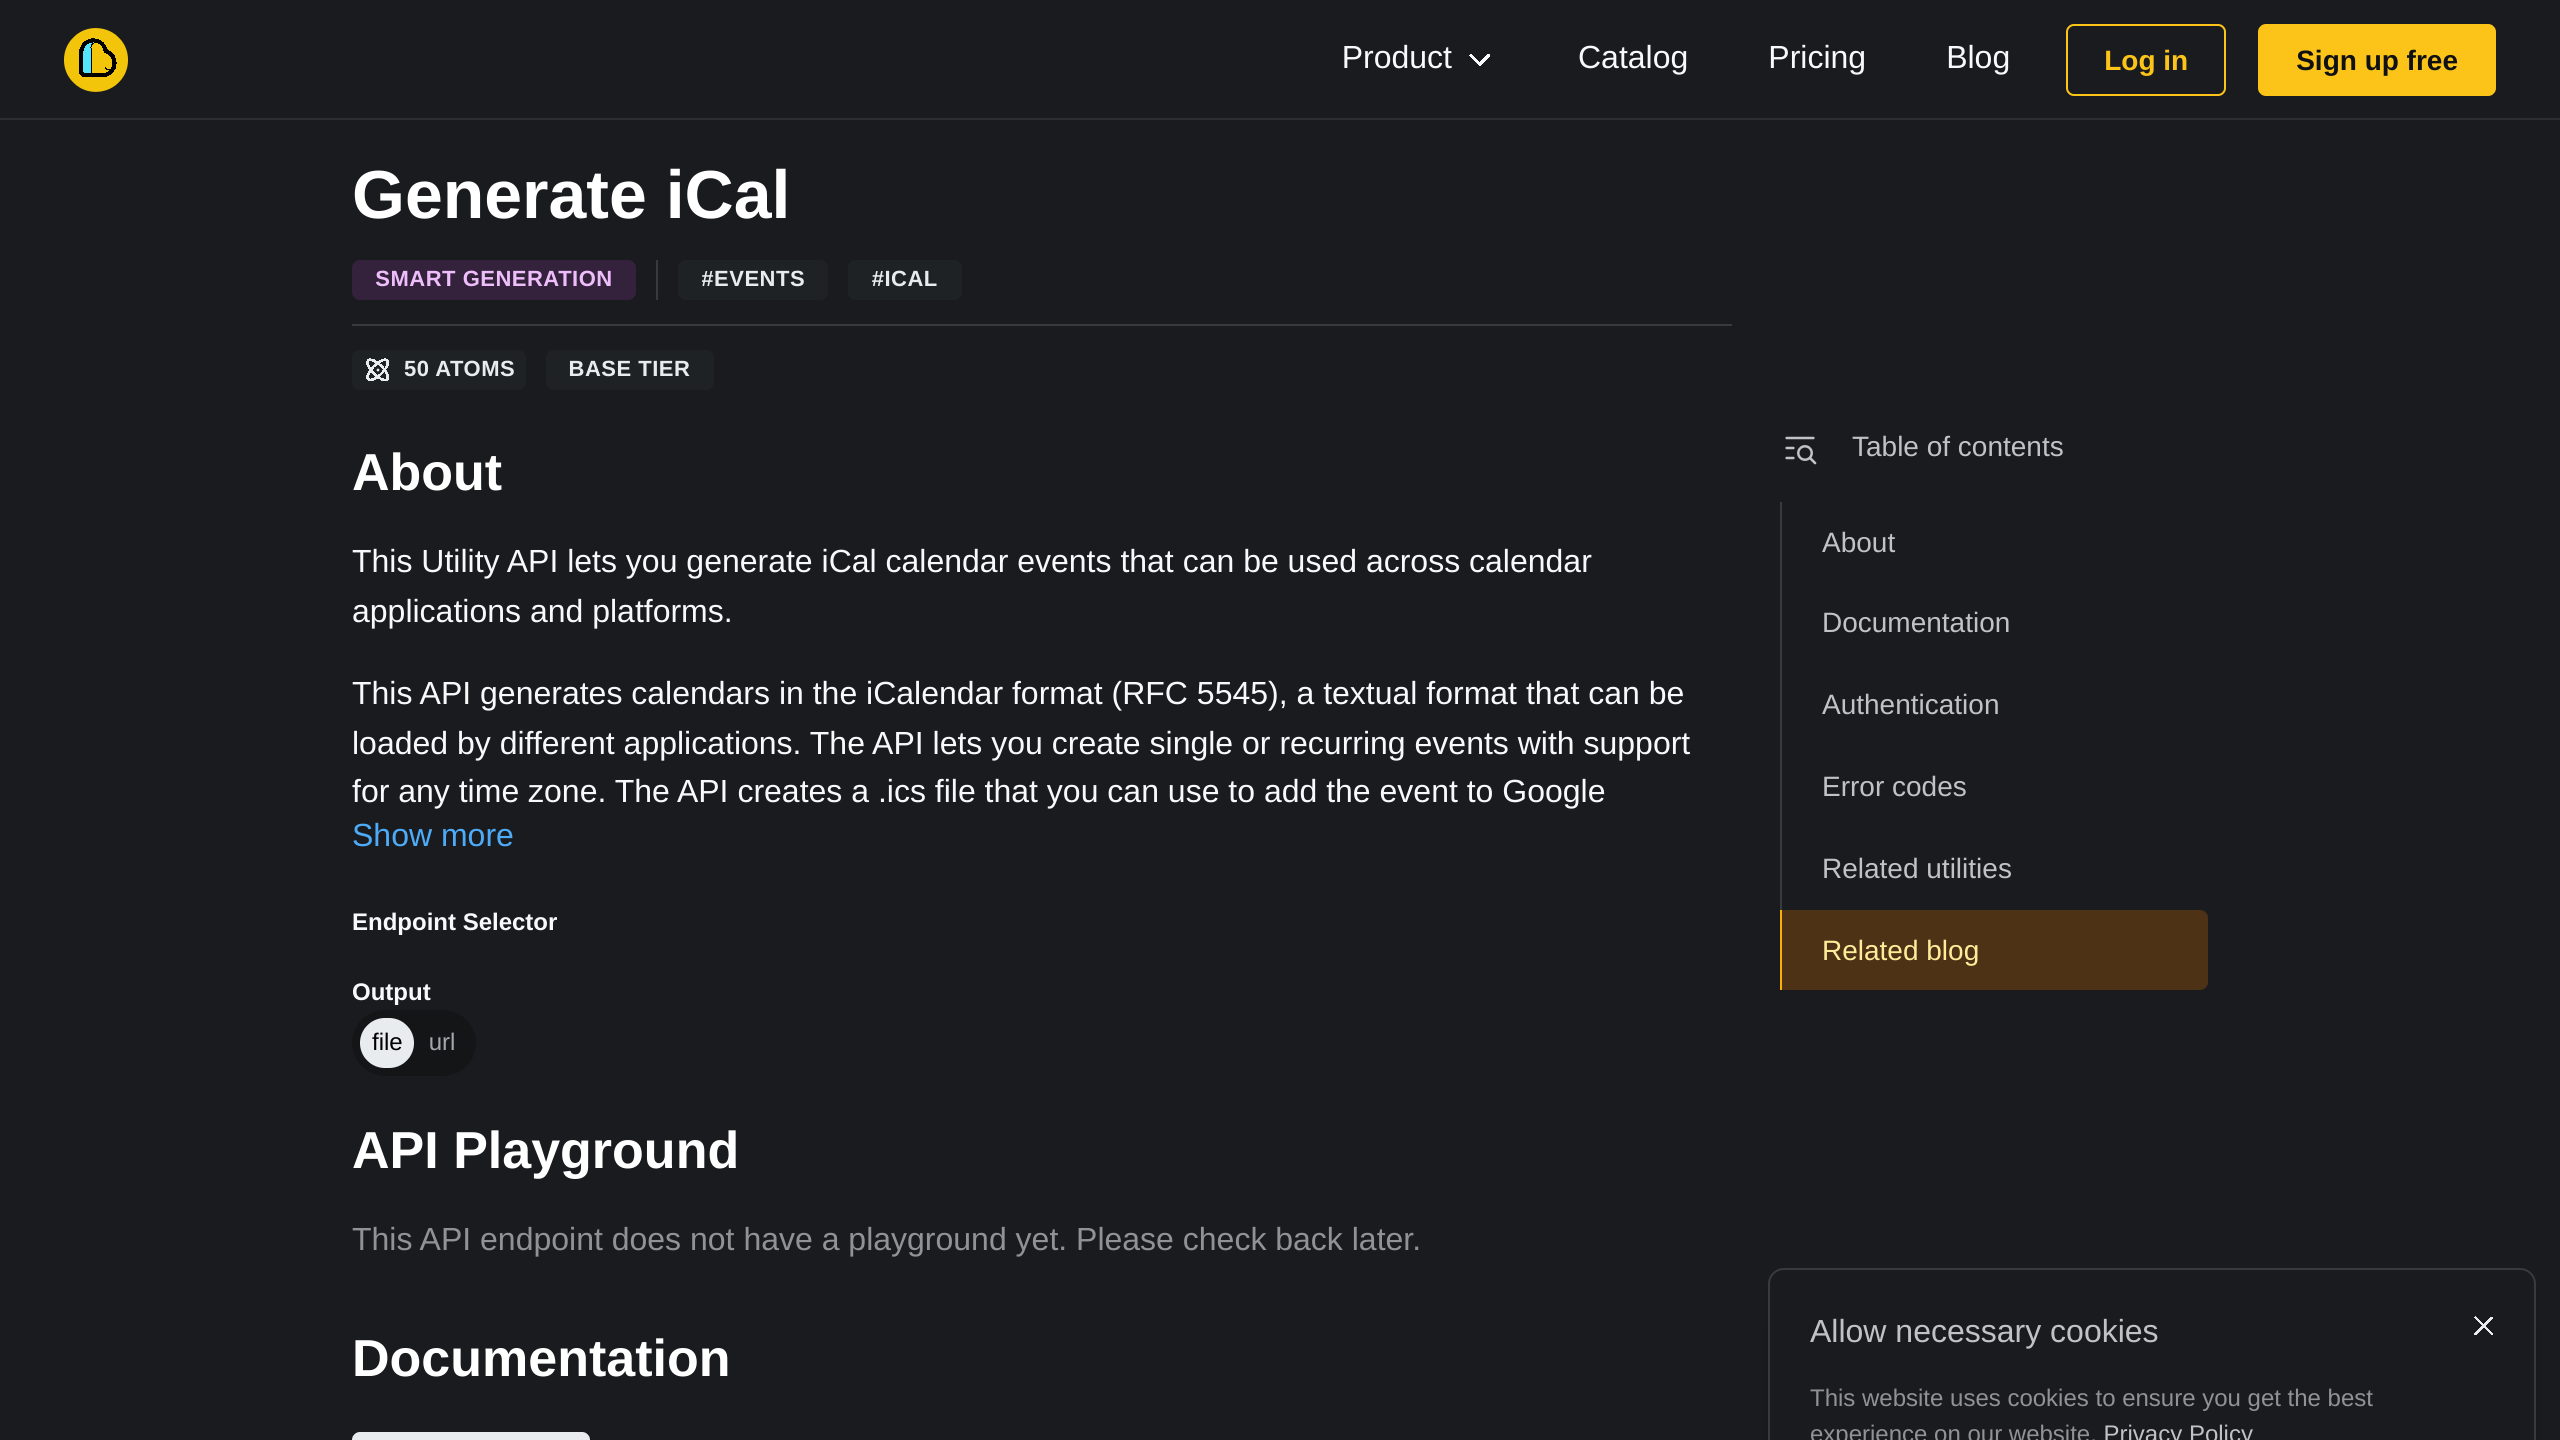 Generate iCAL's website screenshot